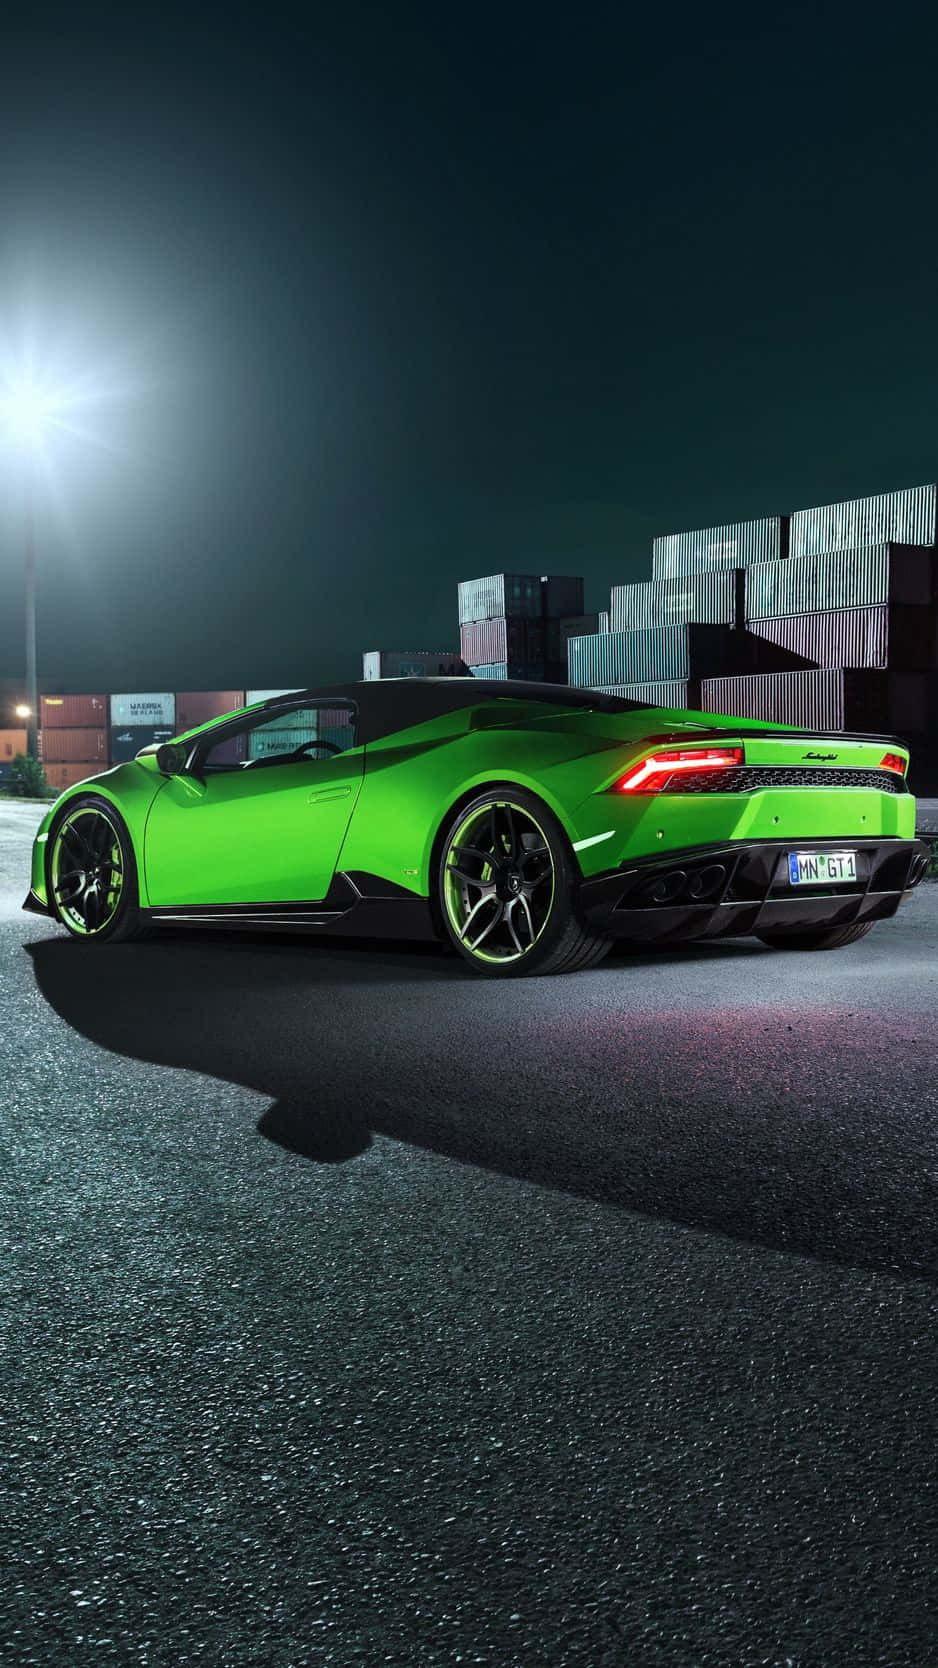 Fantastischesgrünes Lamborghini Iphone-theme Wallpaper